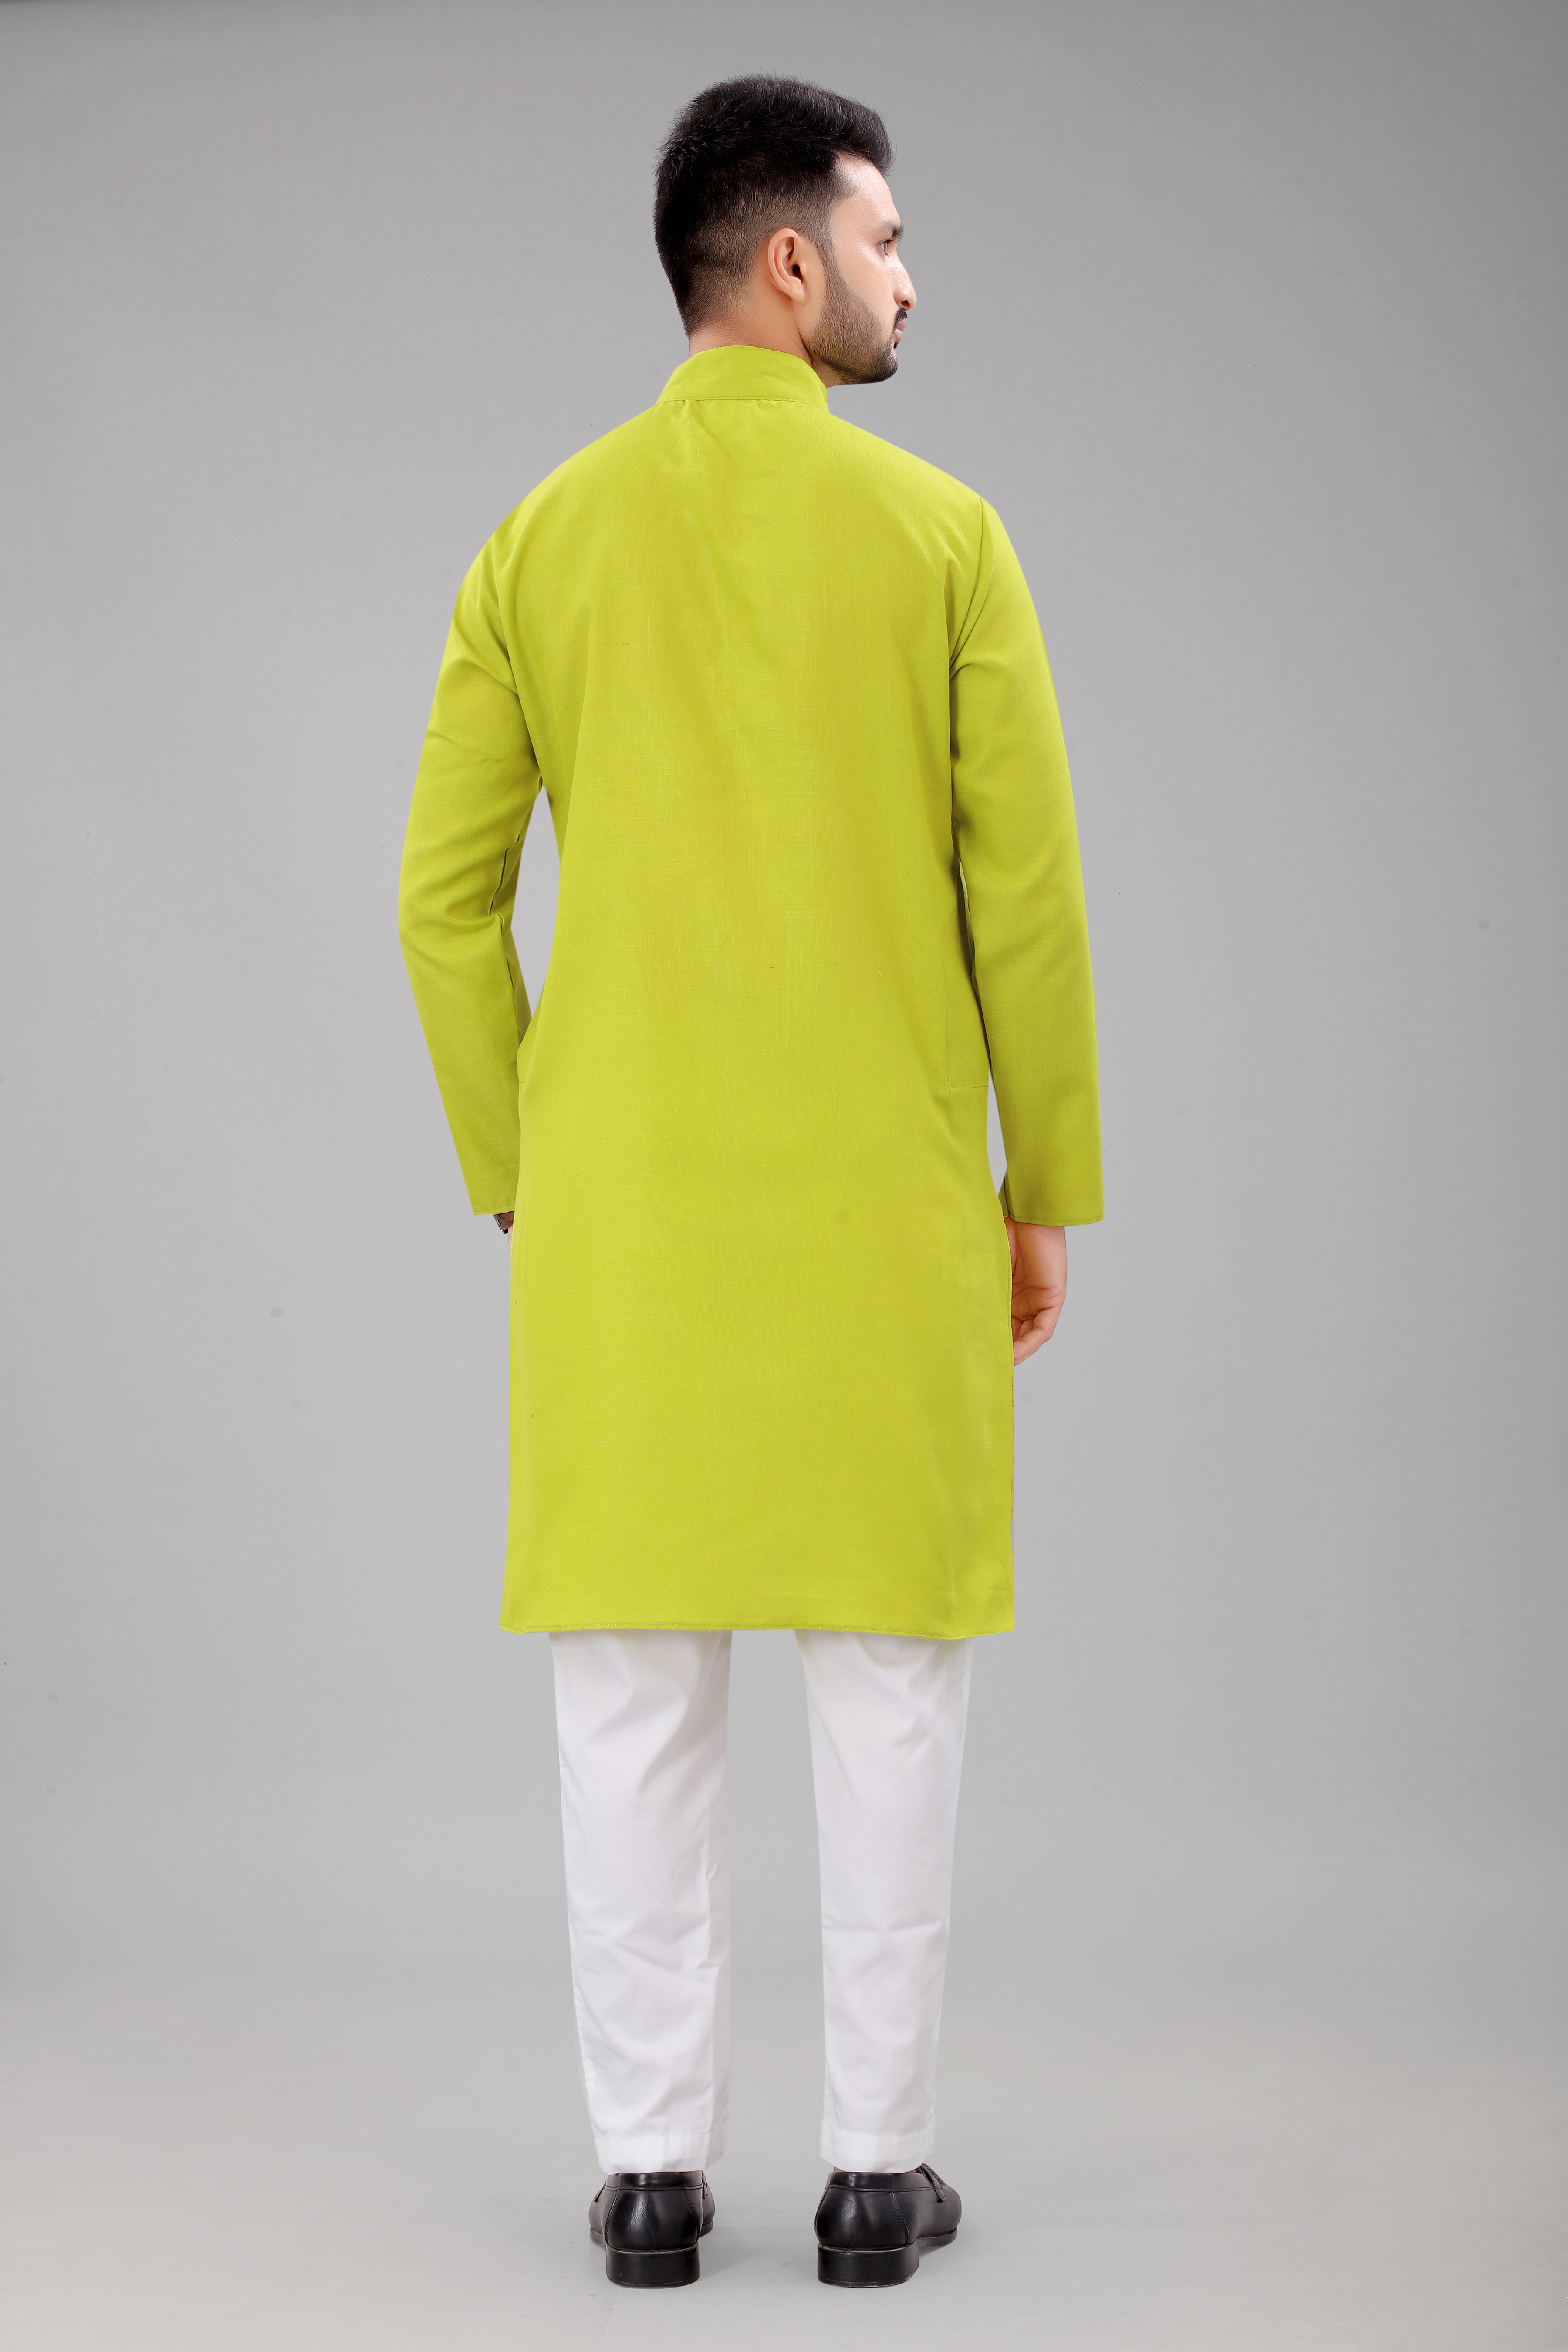 Latest Lemon Yellow Men's  Kurta With White Pajama: Buy Latest Men's Ethnic Wear Online